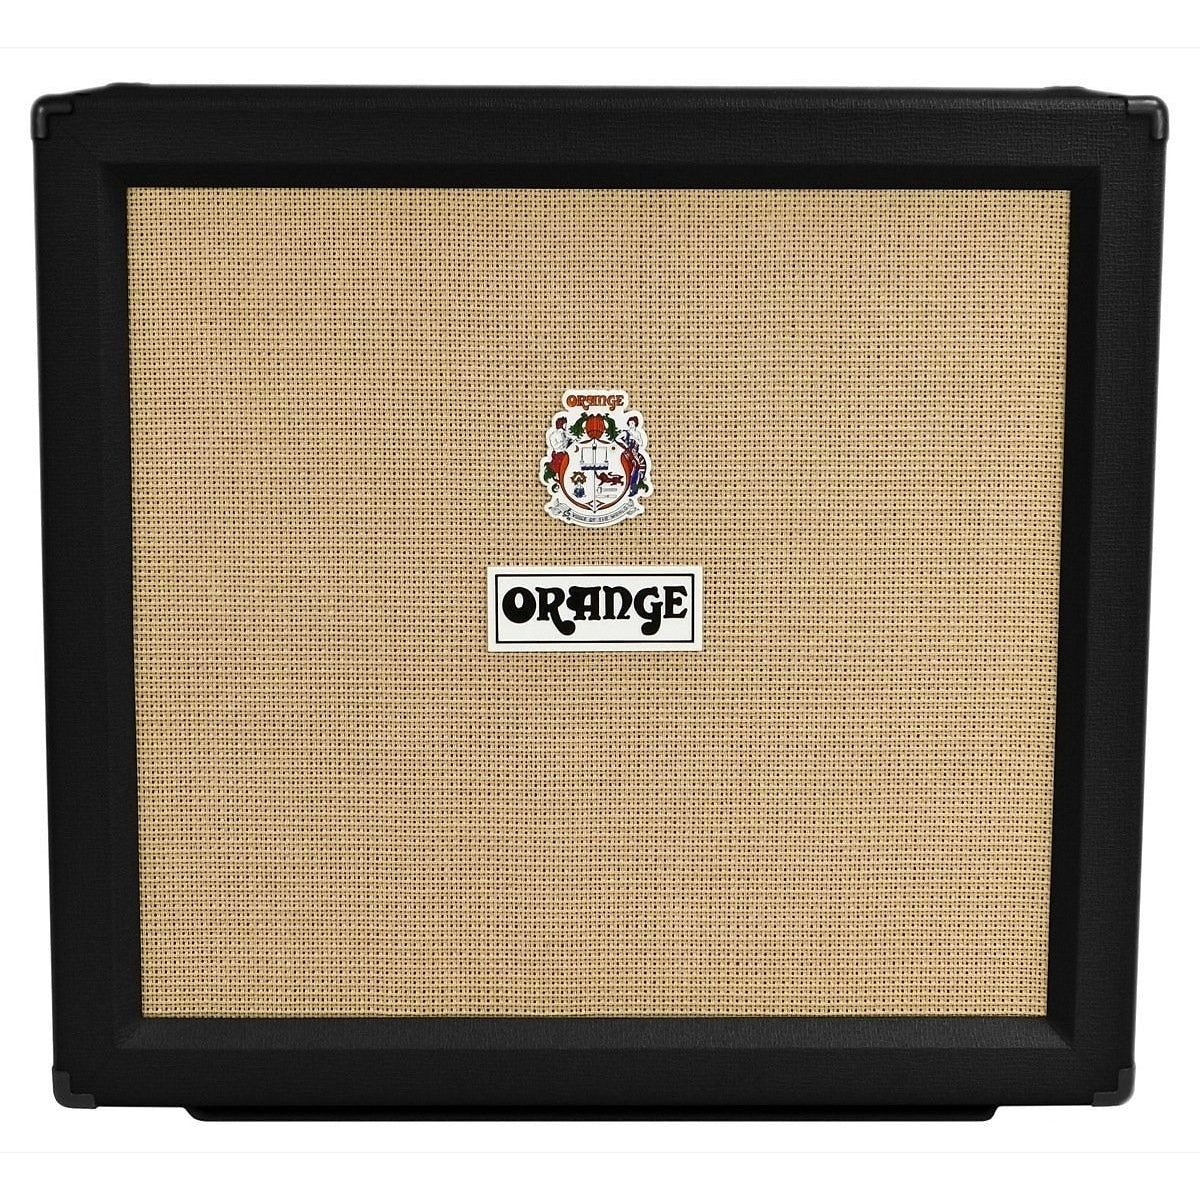 Orange PPC412-C Guitar Speaker Cabinet (240 Watts, 4x12 Inch), Black, 16 Ohms